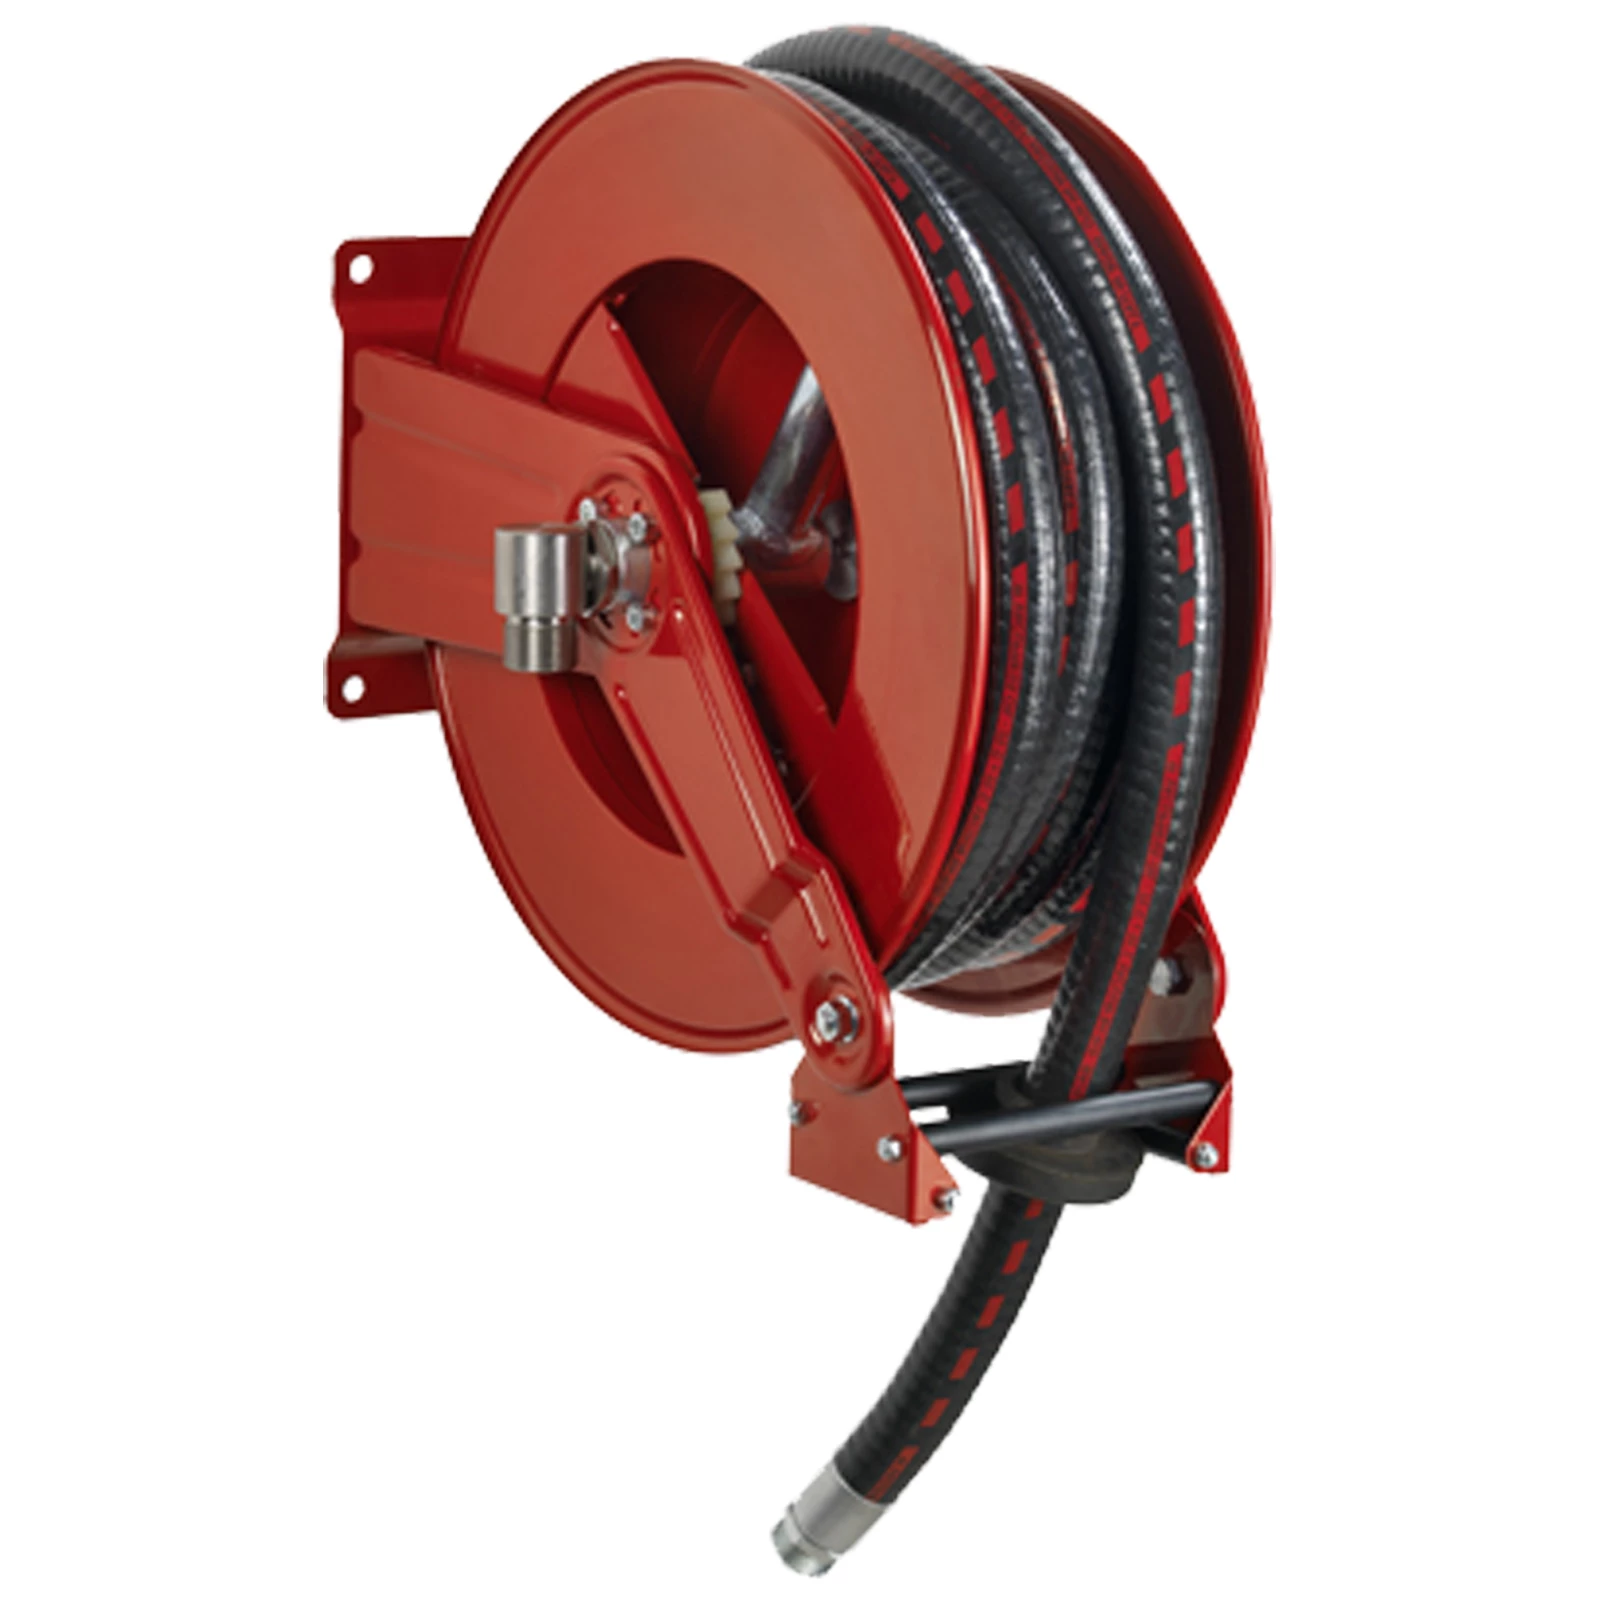 Automatic metal reel with 15 meter hose 1″Automatic metal reel